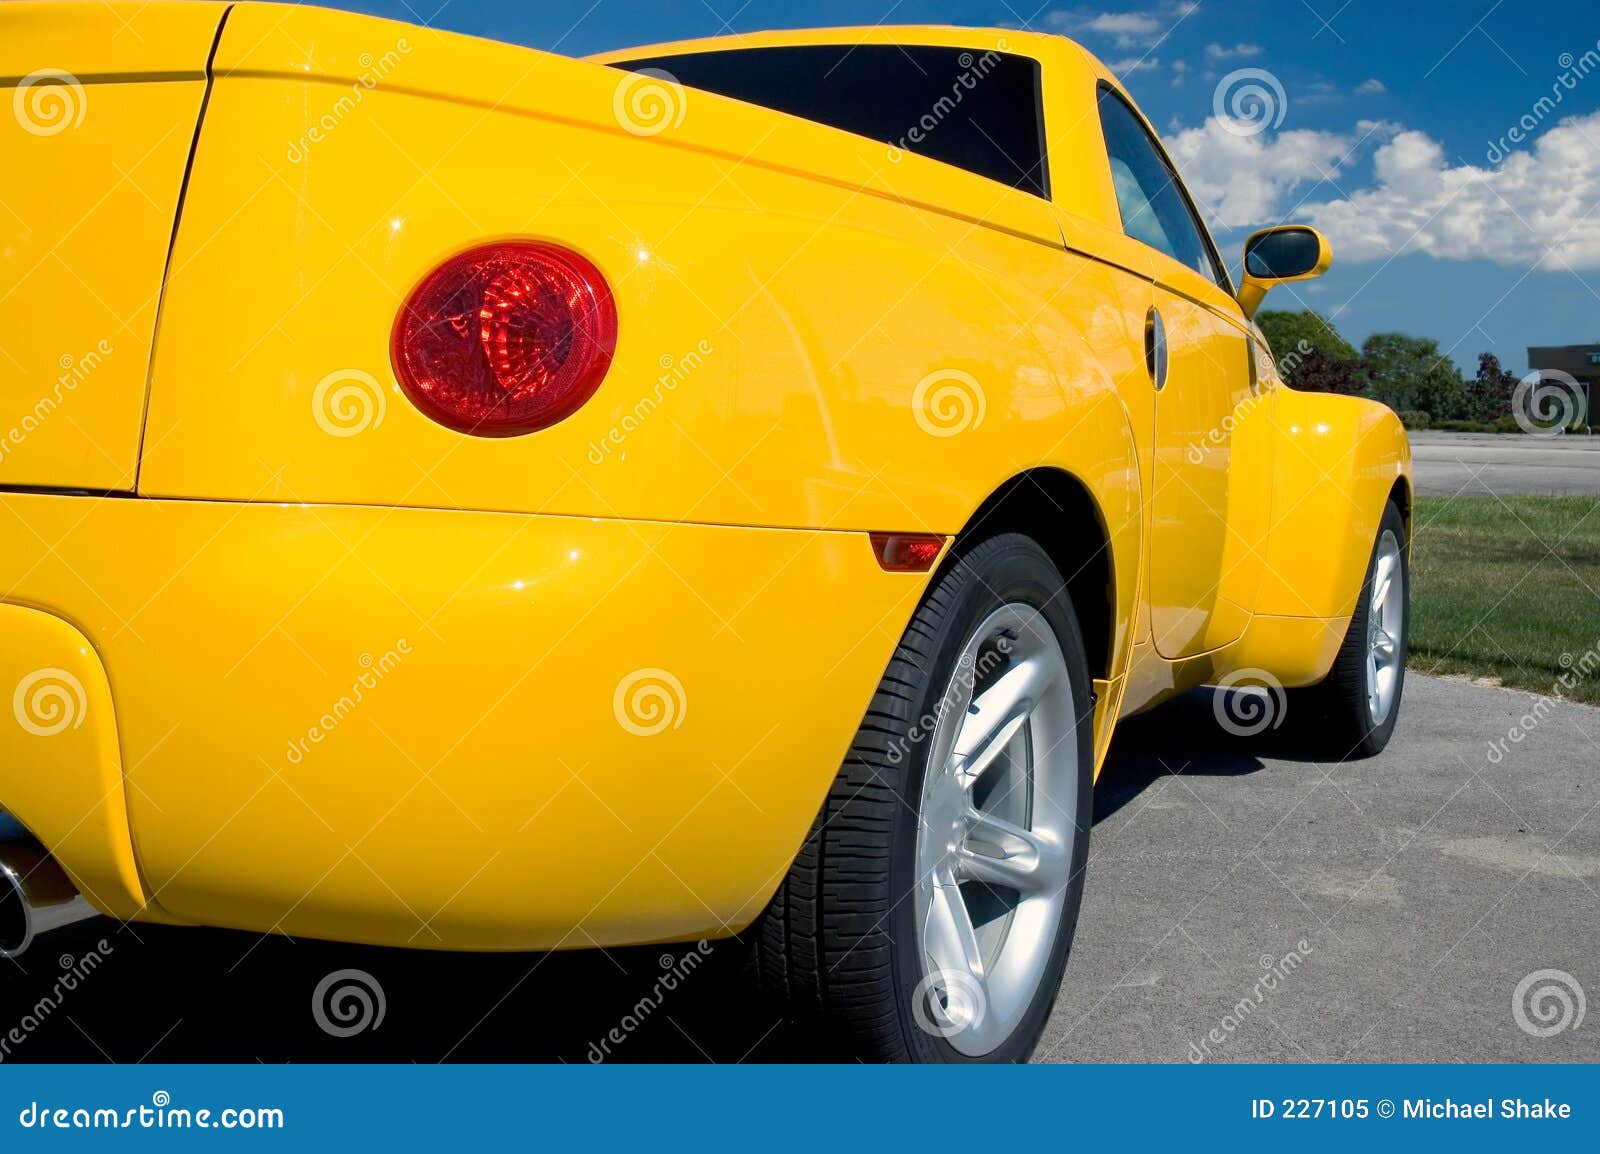  Yellow Truck  stock image Image of auto transportation 